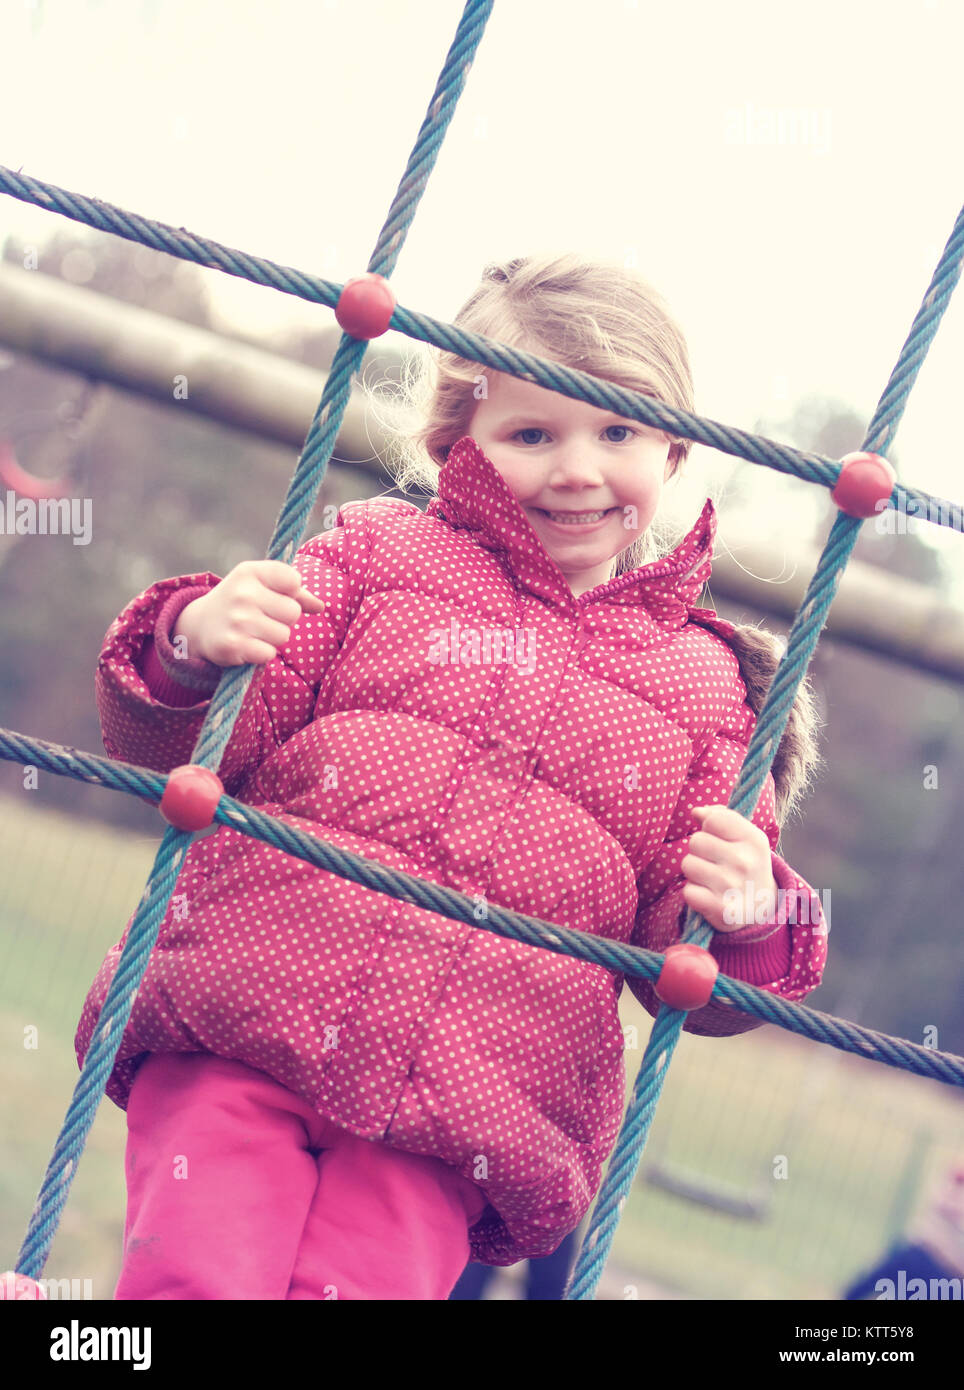 Smiling girl on a climbing frame Stock Photo